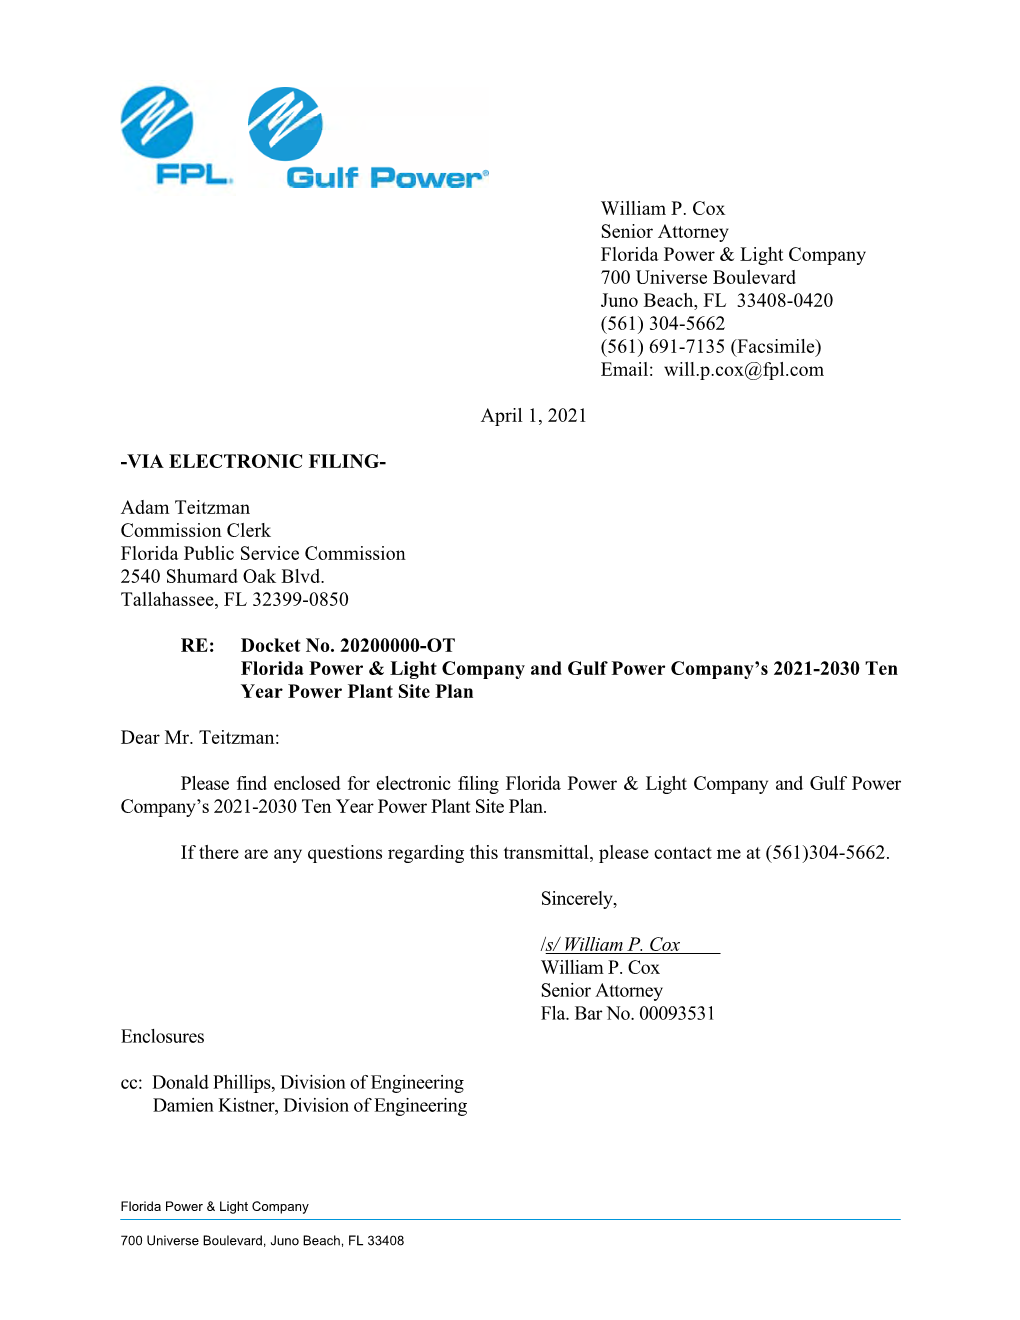 William P. Cox Senior Attorney Florida Power & Light Company 700